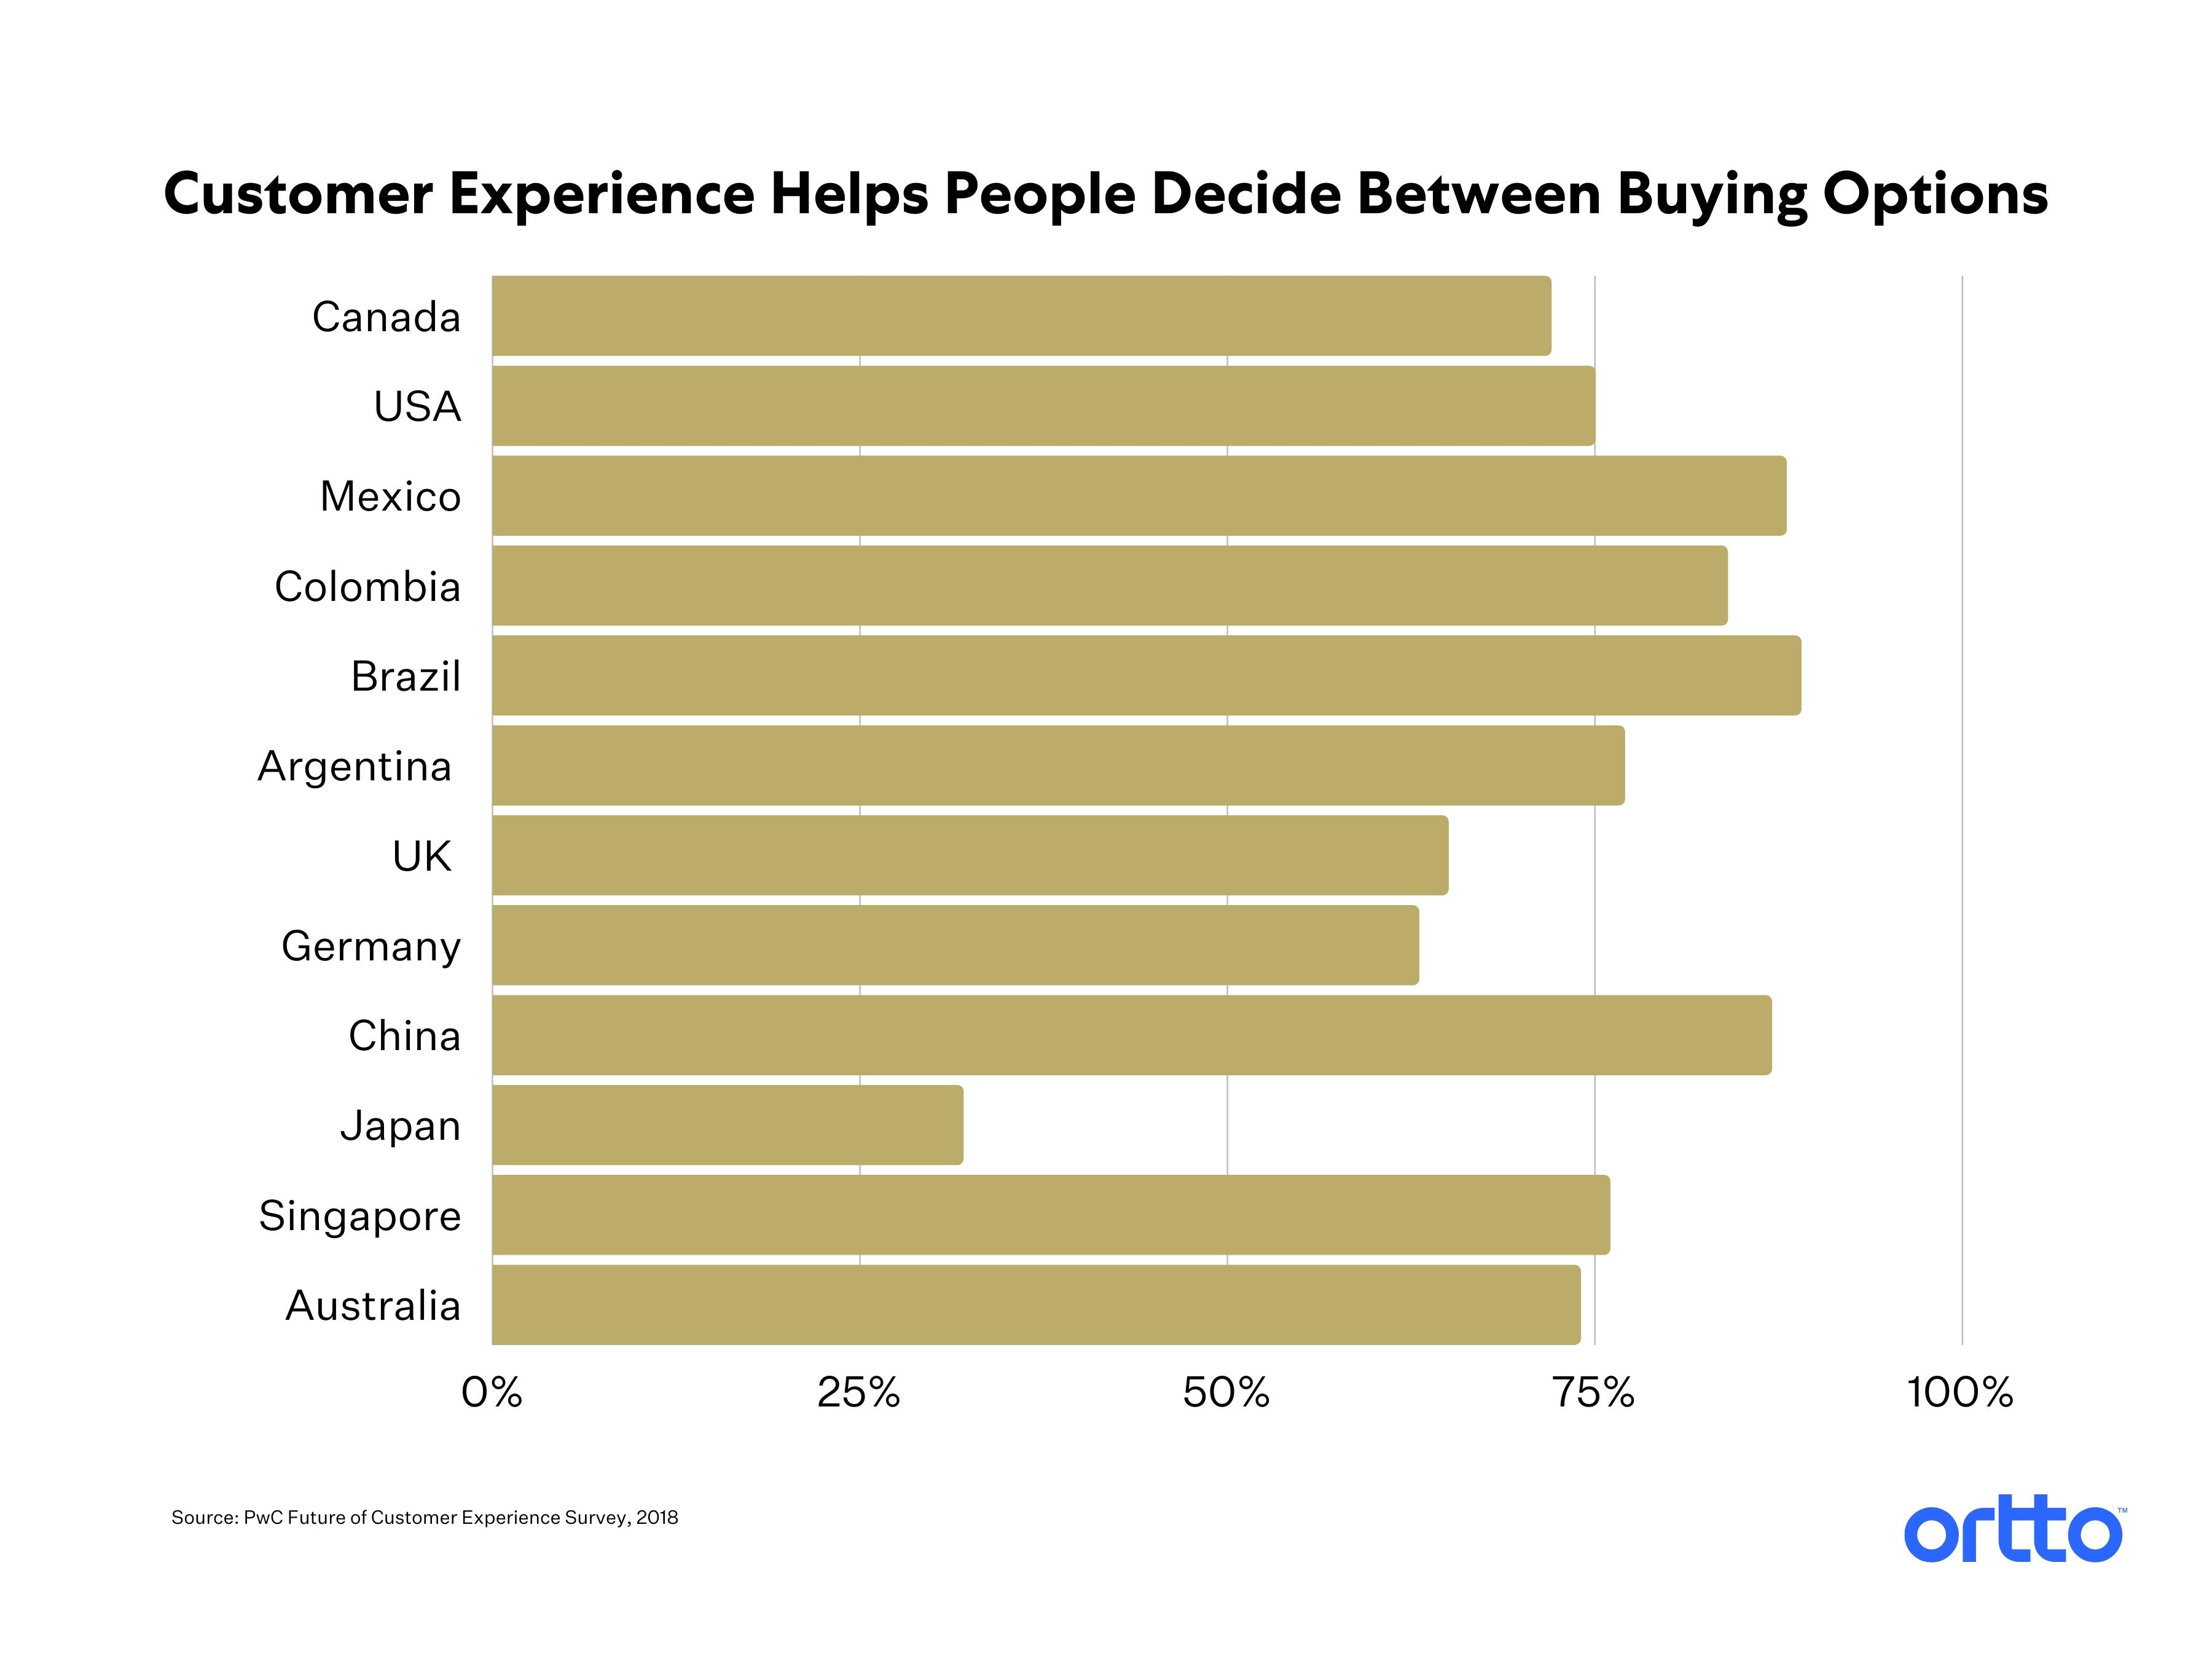 Customer experience helps people decide between buying options